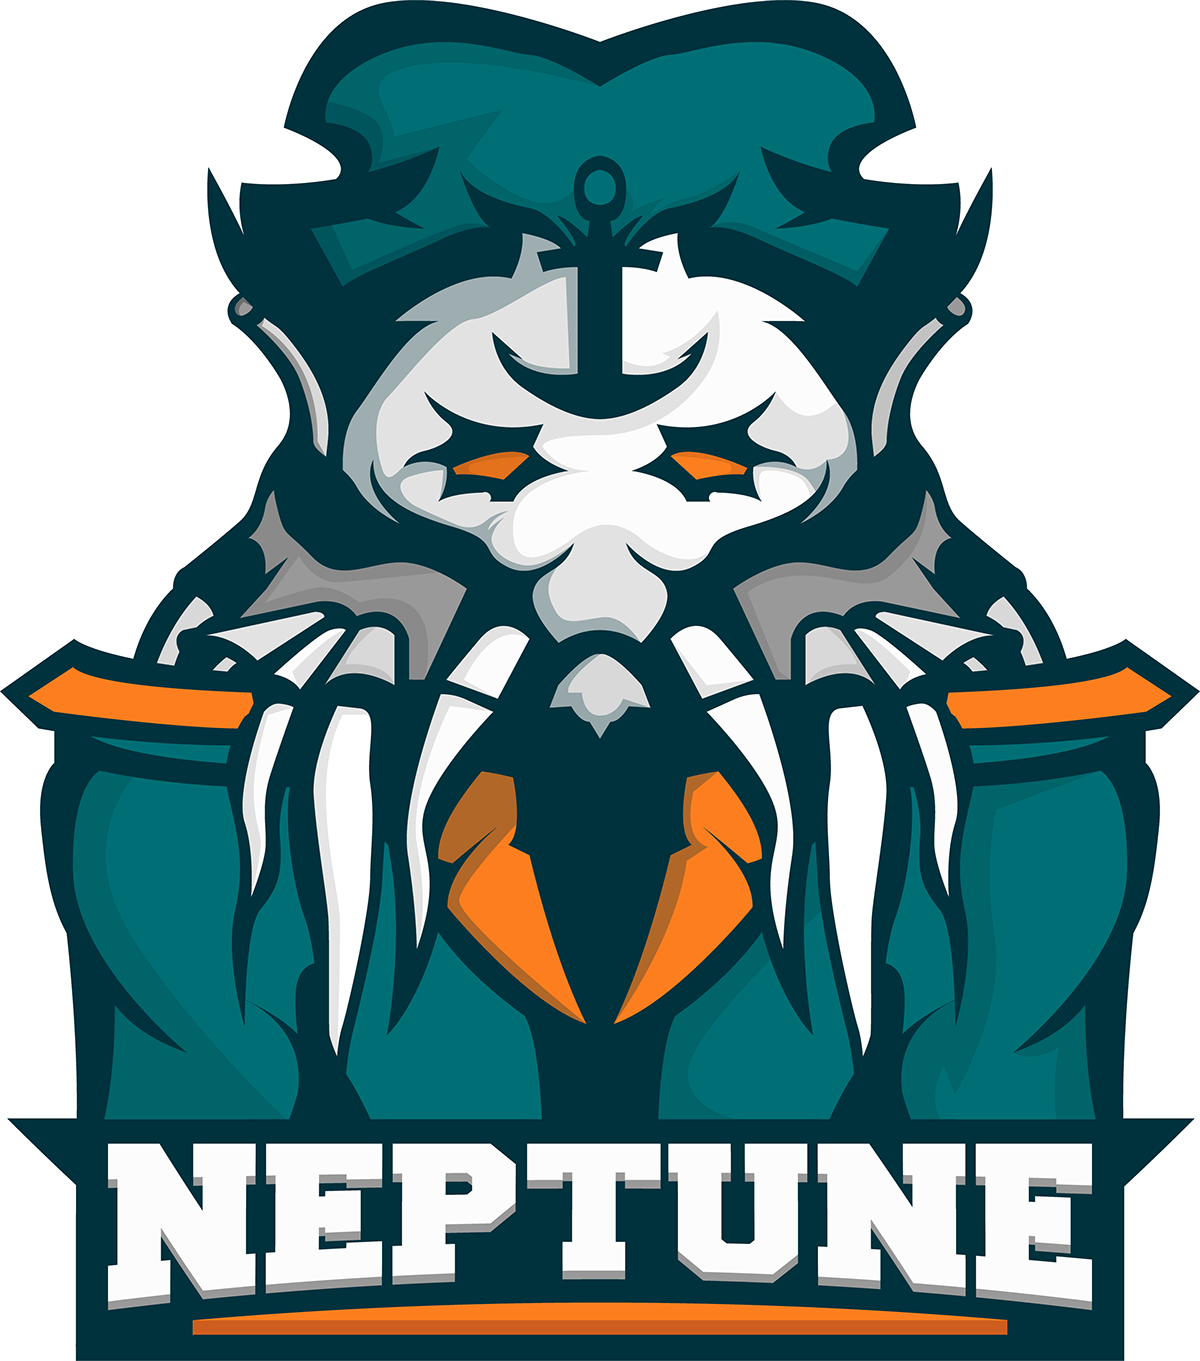 Neptune Logo - Neptune eSports logo on Behance